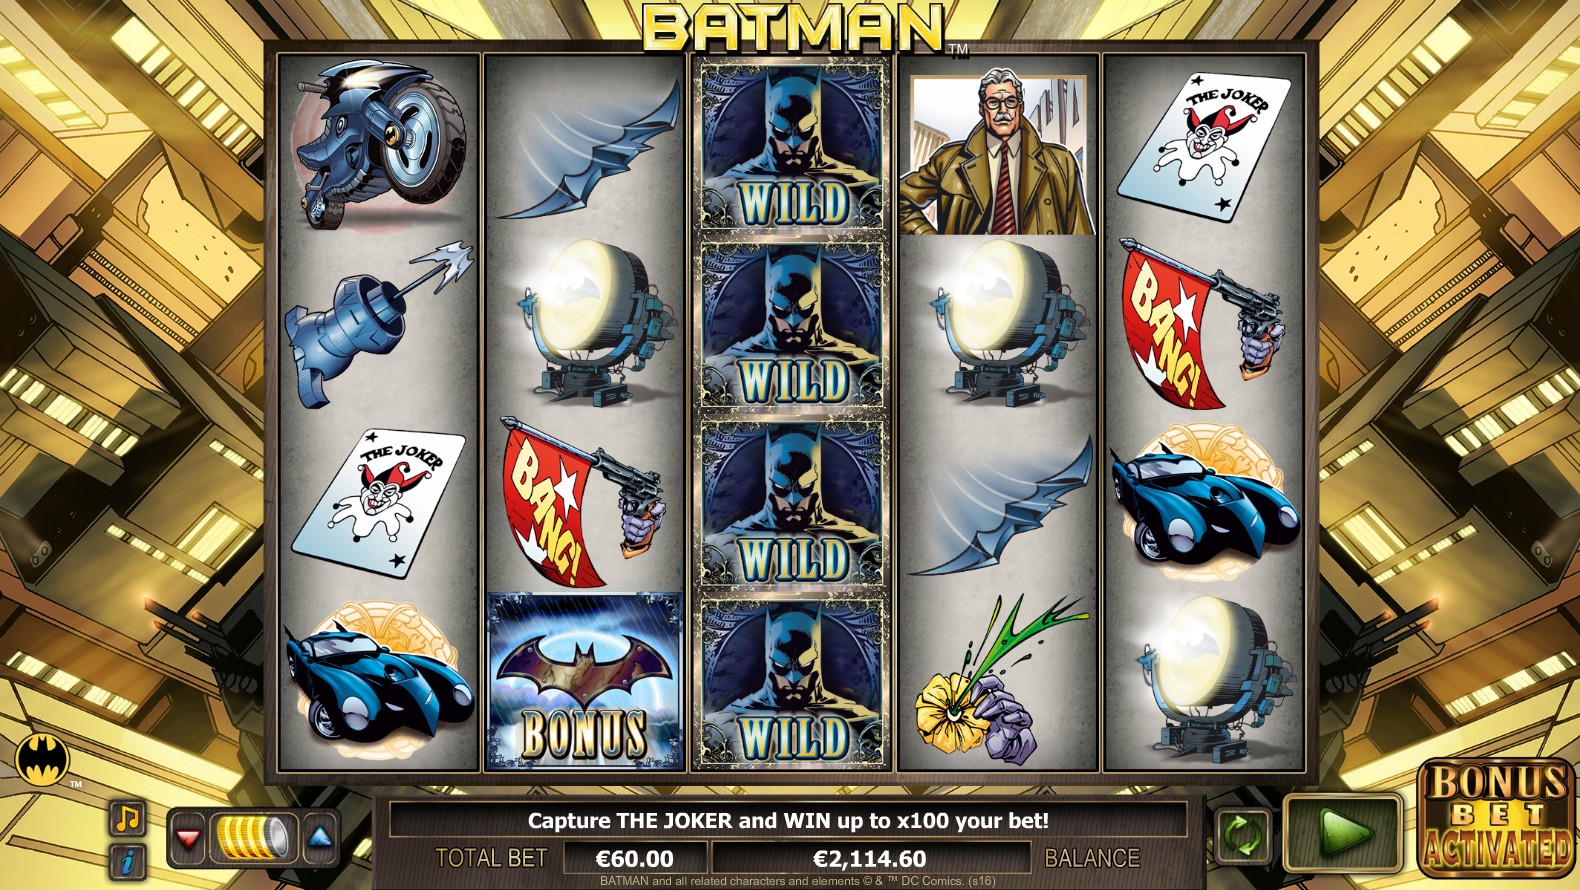 Batman (Batman) from category Slots